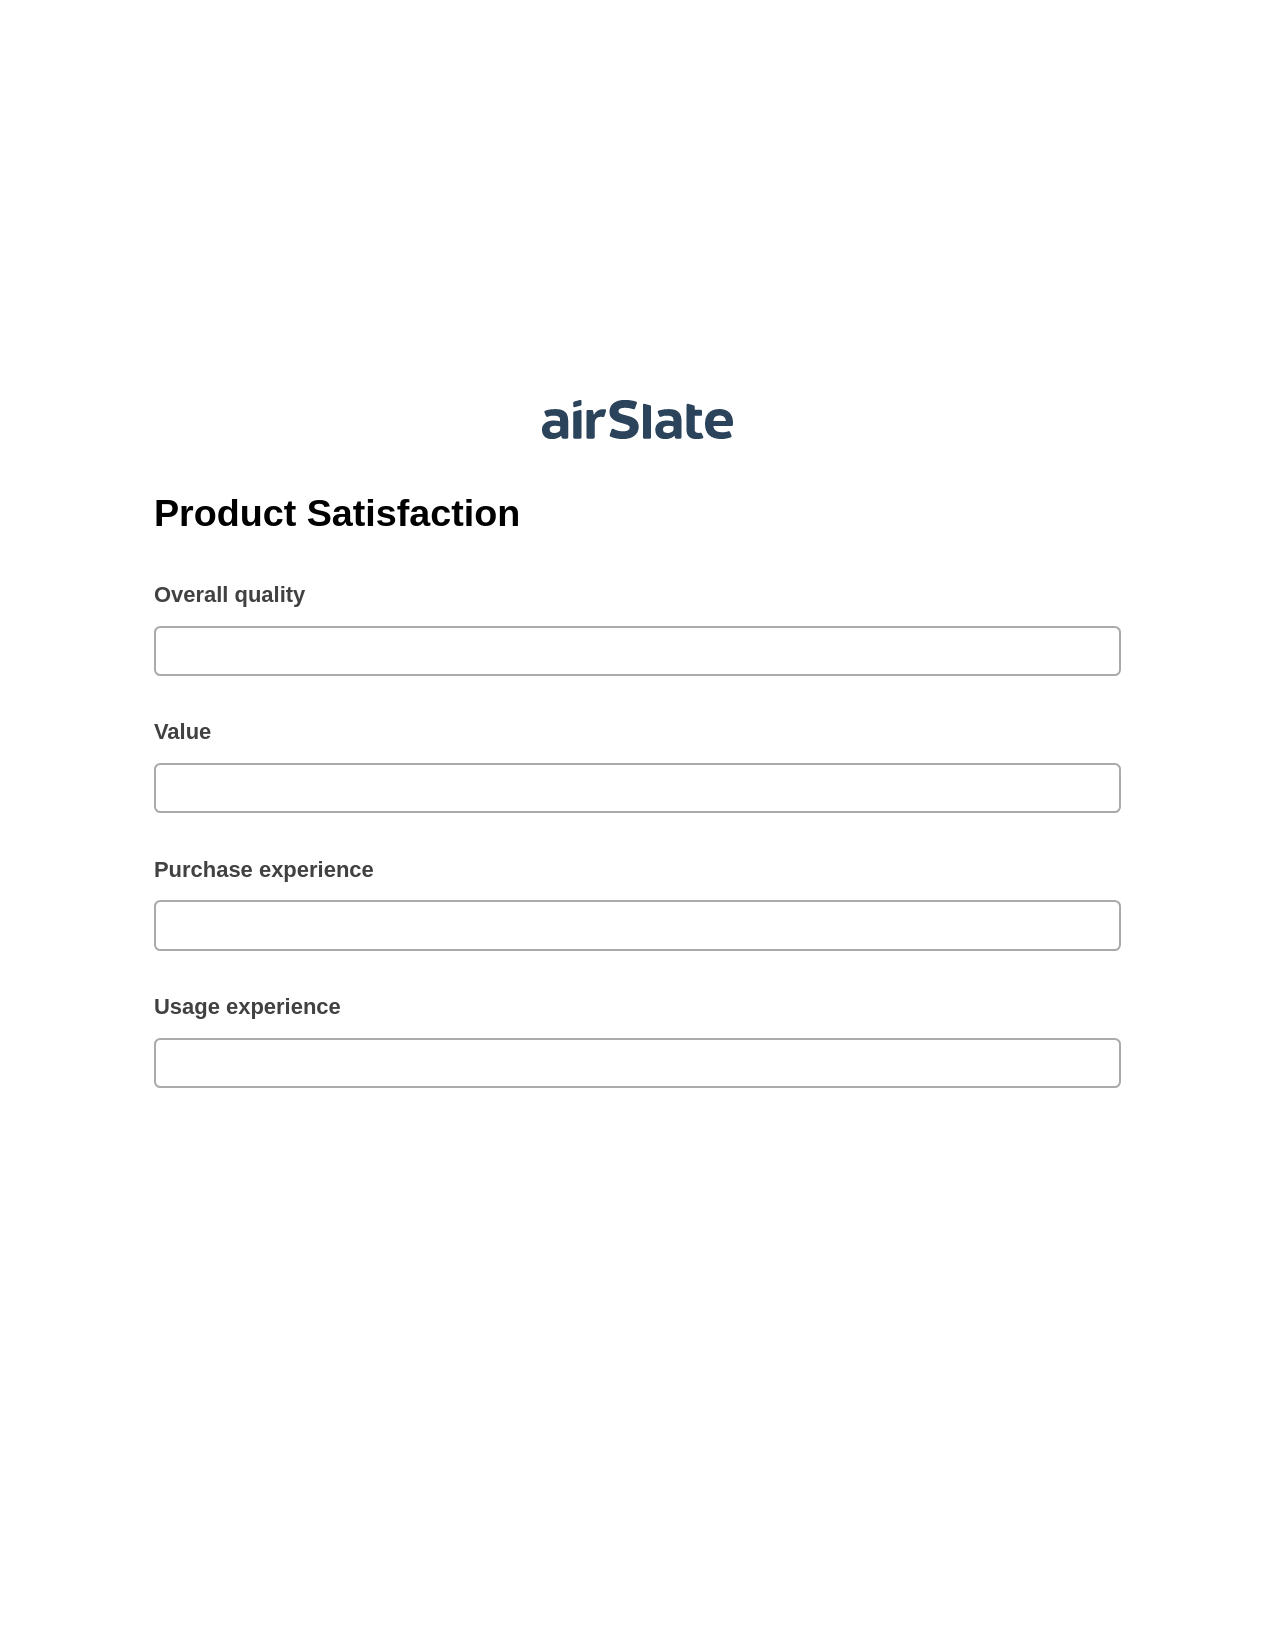 Product Satisfaction Pre-fill Document Bot, Invoke Salesforce Process Bot, Archive to SharePoint Folder Bot